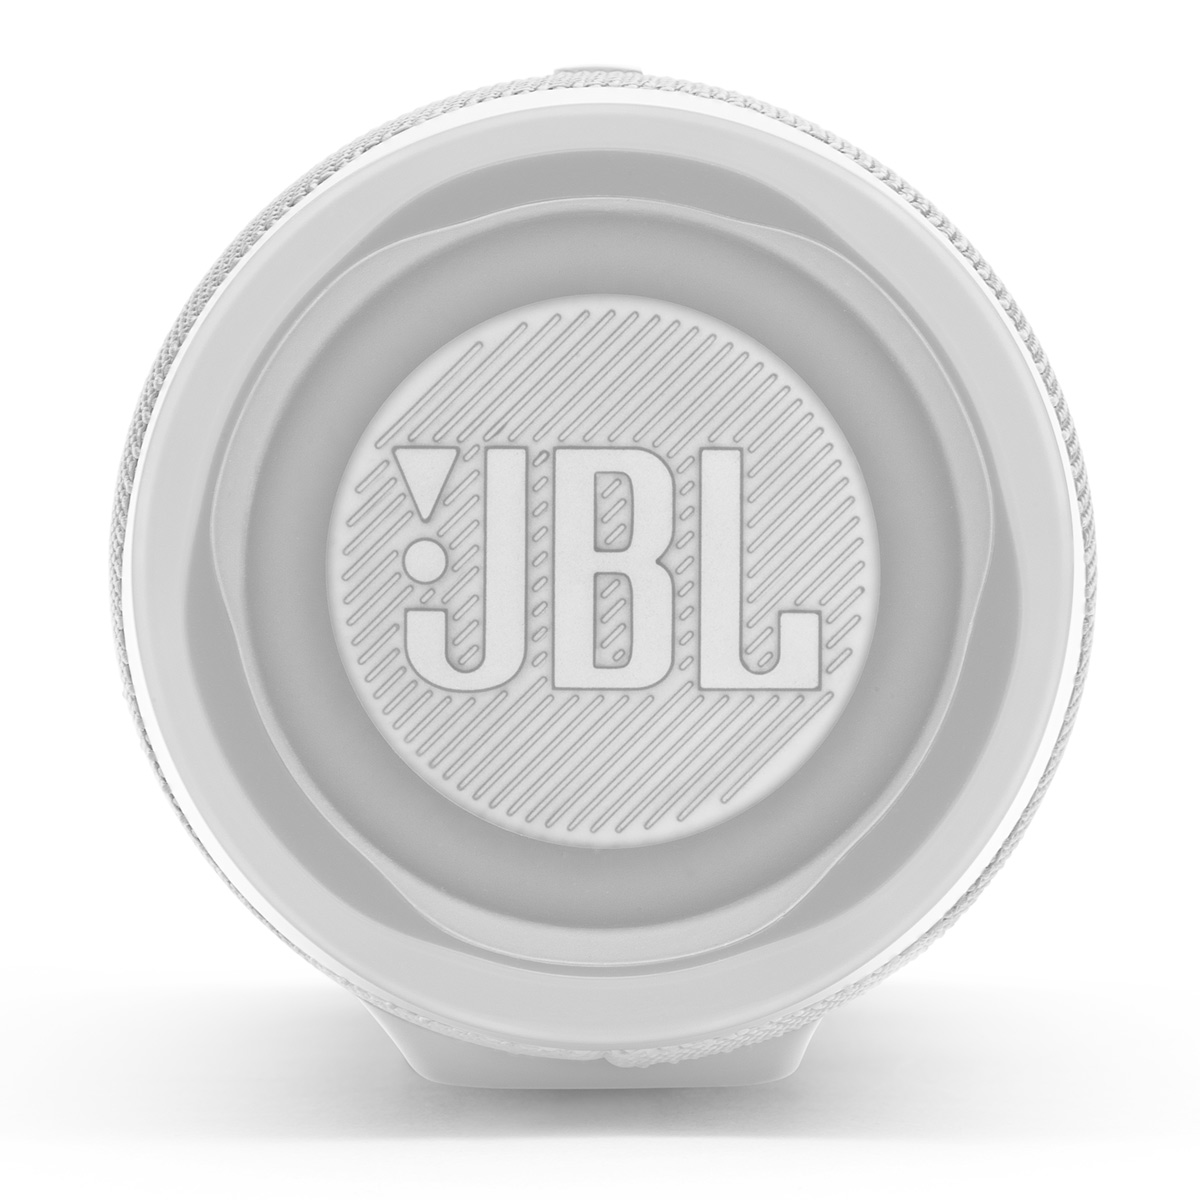 JBL Charge 4 Portable Waterproof Wireless Bluetooth Speaker - White - image 5 of 7